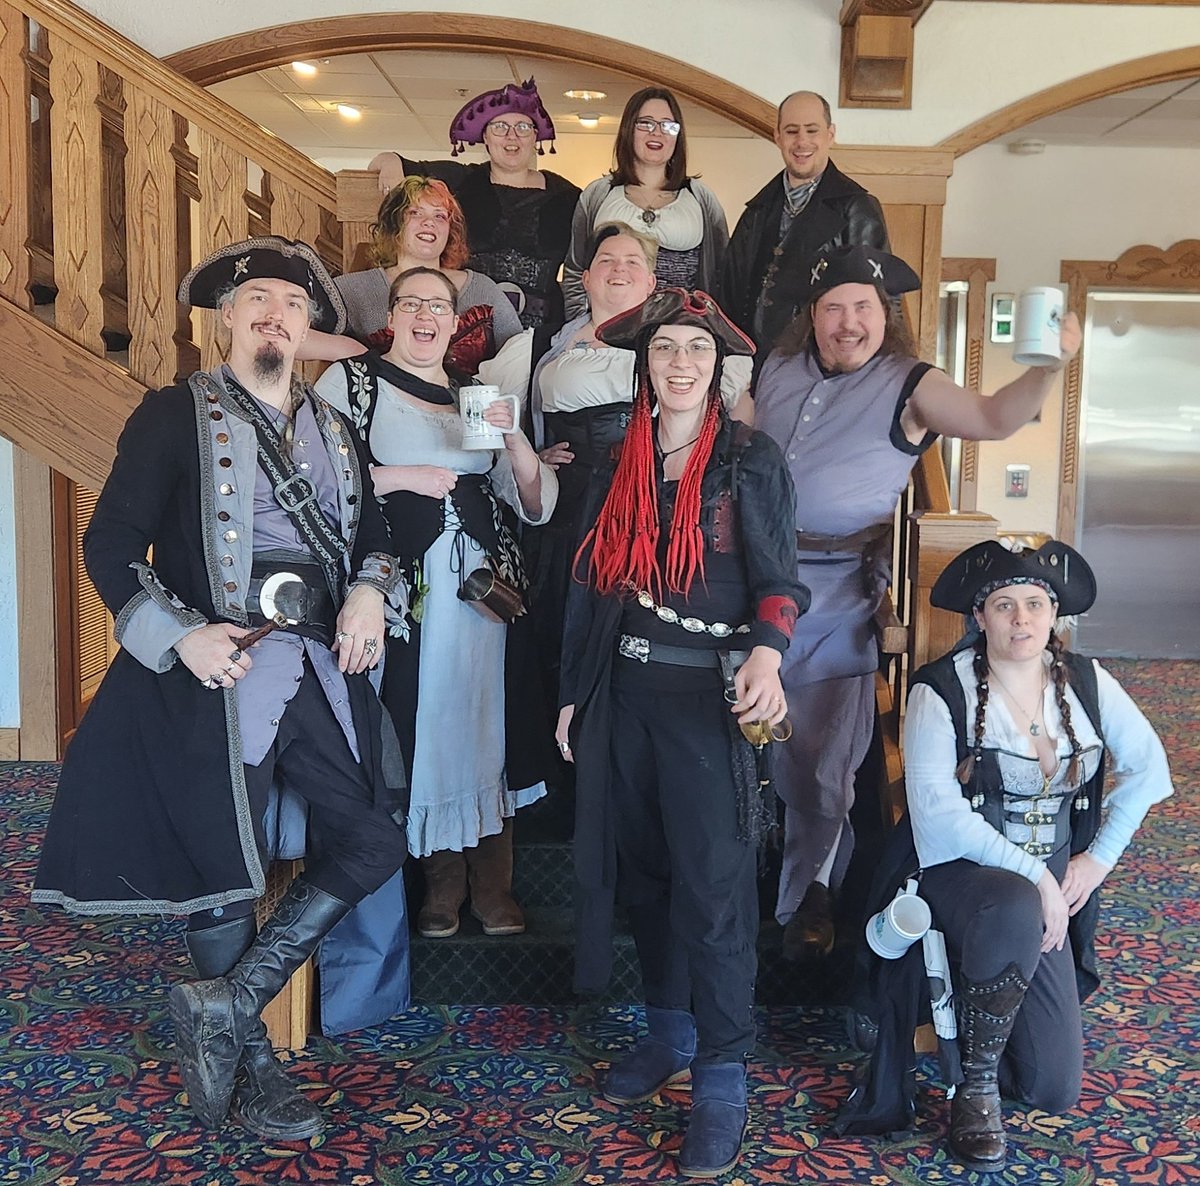 Crew of the Silver Moon at Frankenfeast 
#CaptainTimberGrayWolf #crewofthesilvermoon #pirate #18thcentury #reenactor #historical #priviteer #mermaid